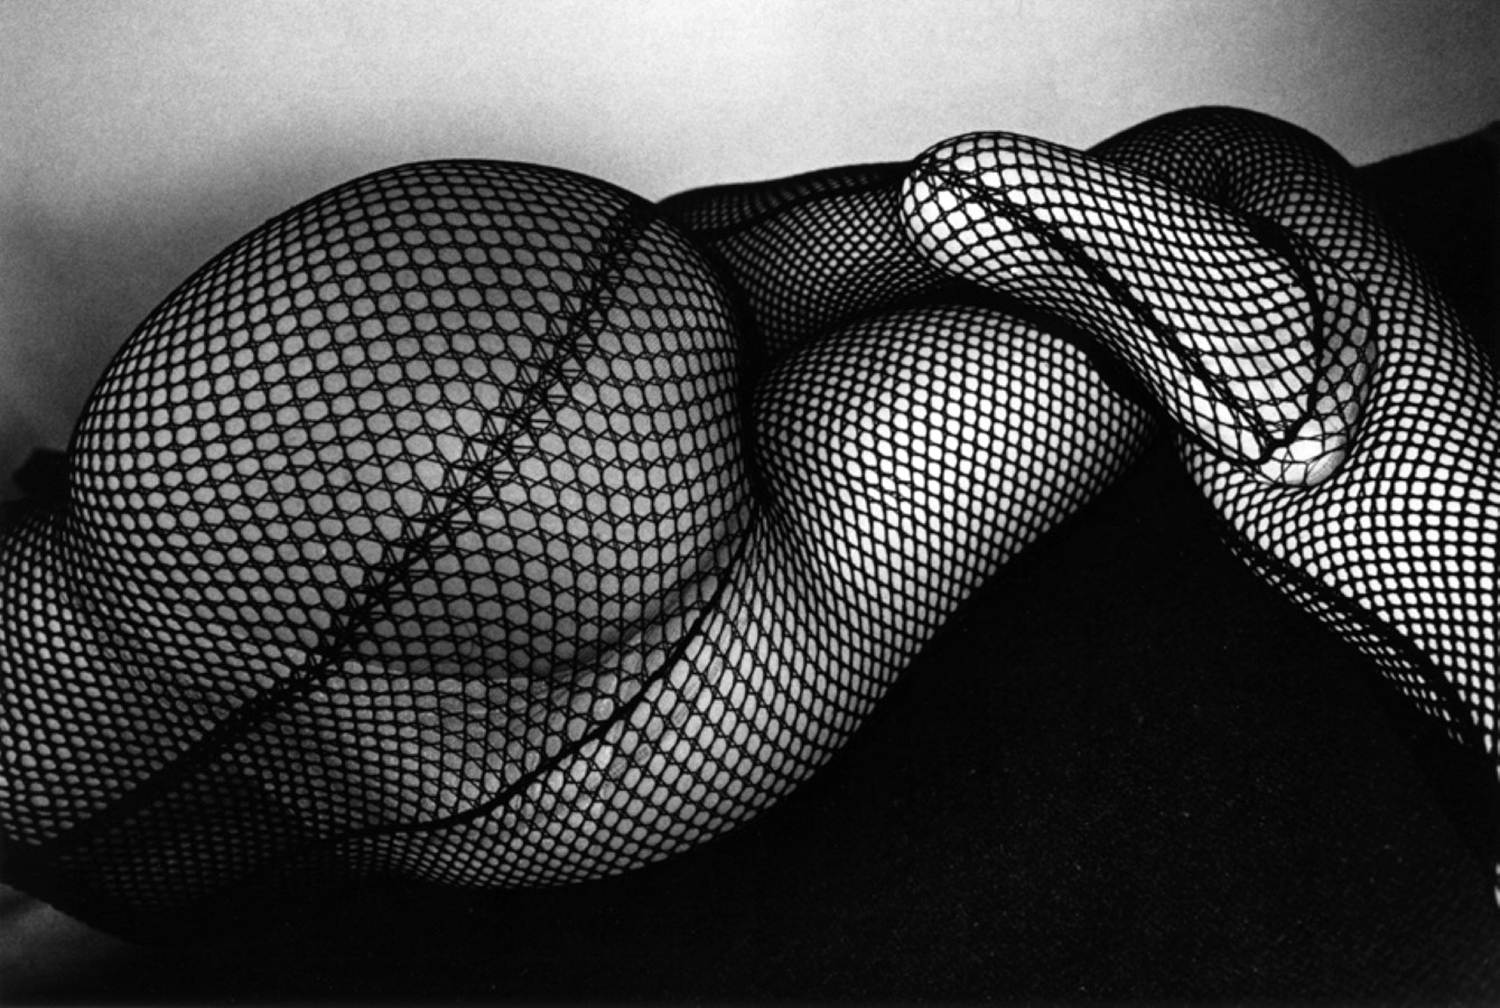 Erotic Black Series - 10 Beautiful and Playful Erotic Photographs â€“ Scene360